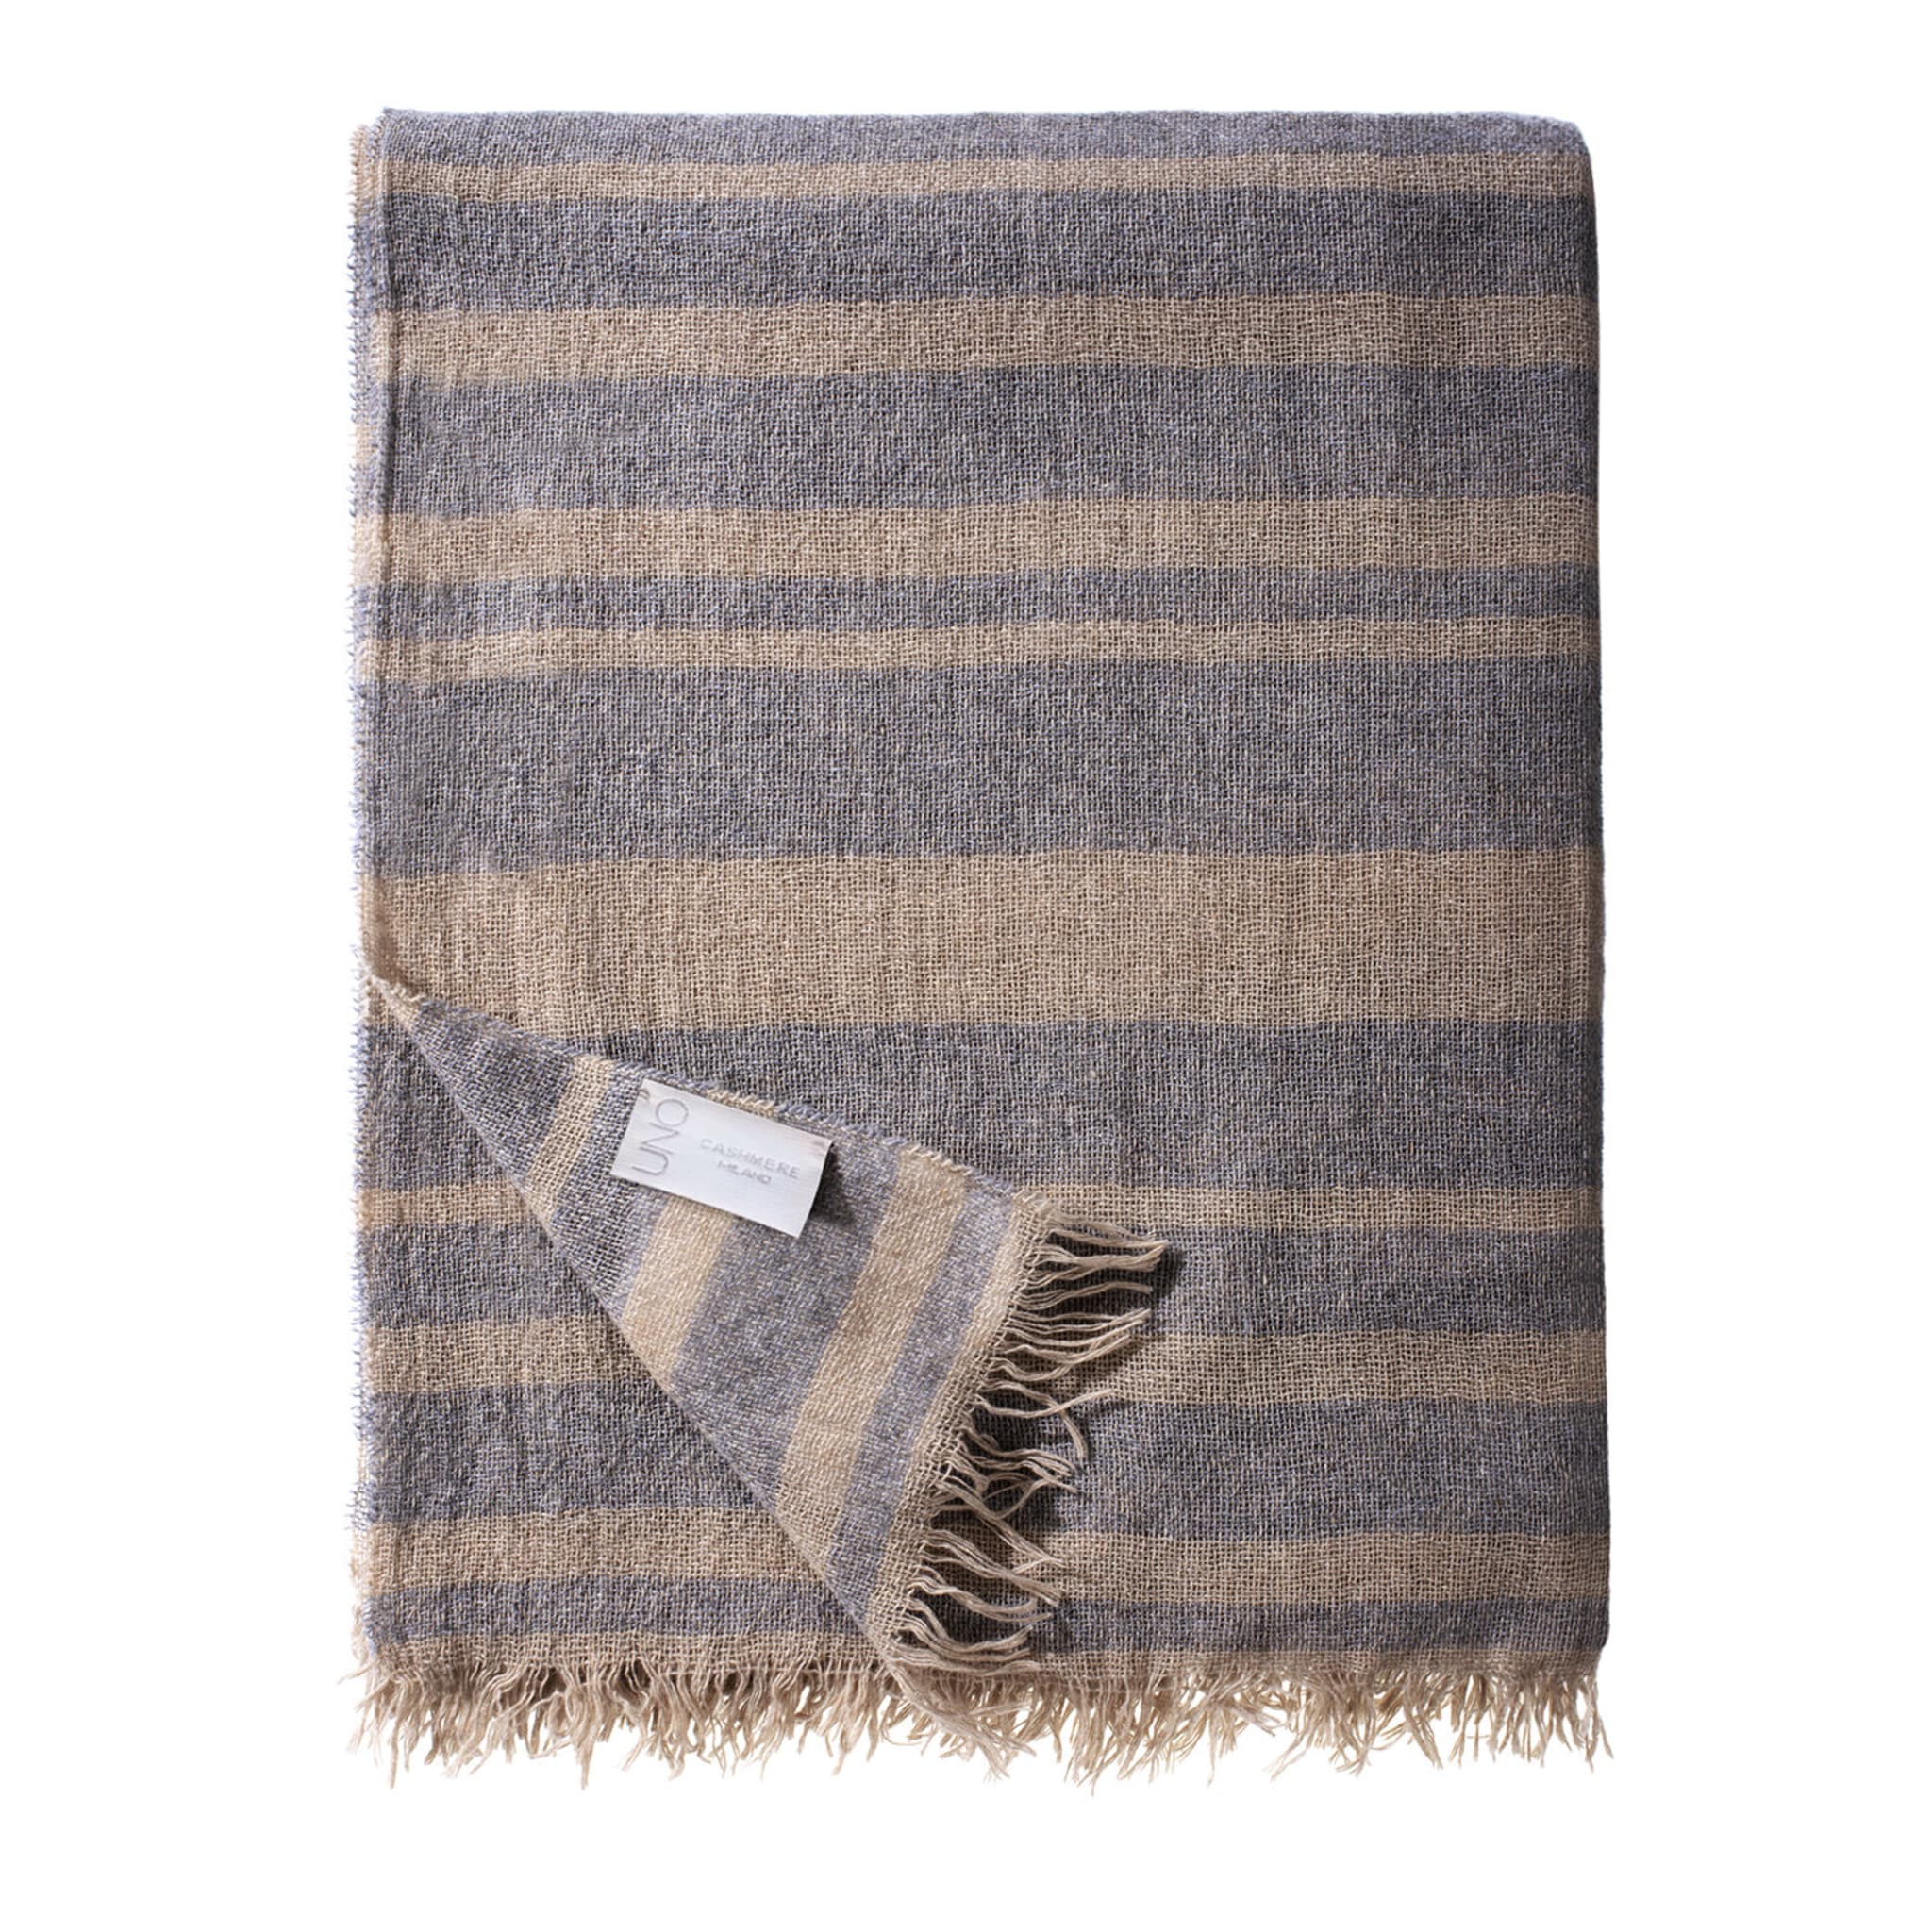 Medium Mauve Striped Cashmere Blanket - Main view